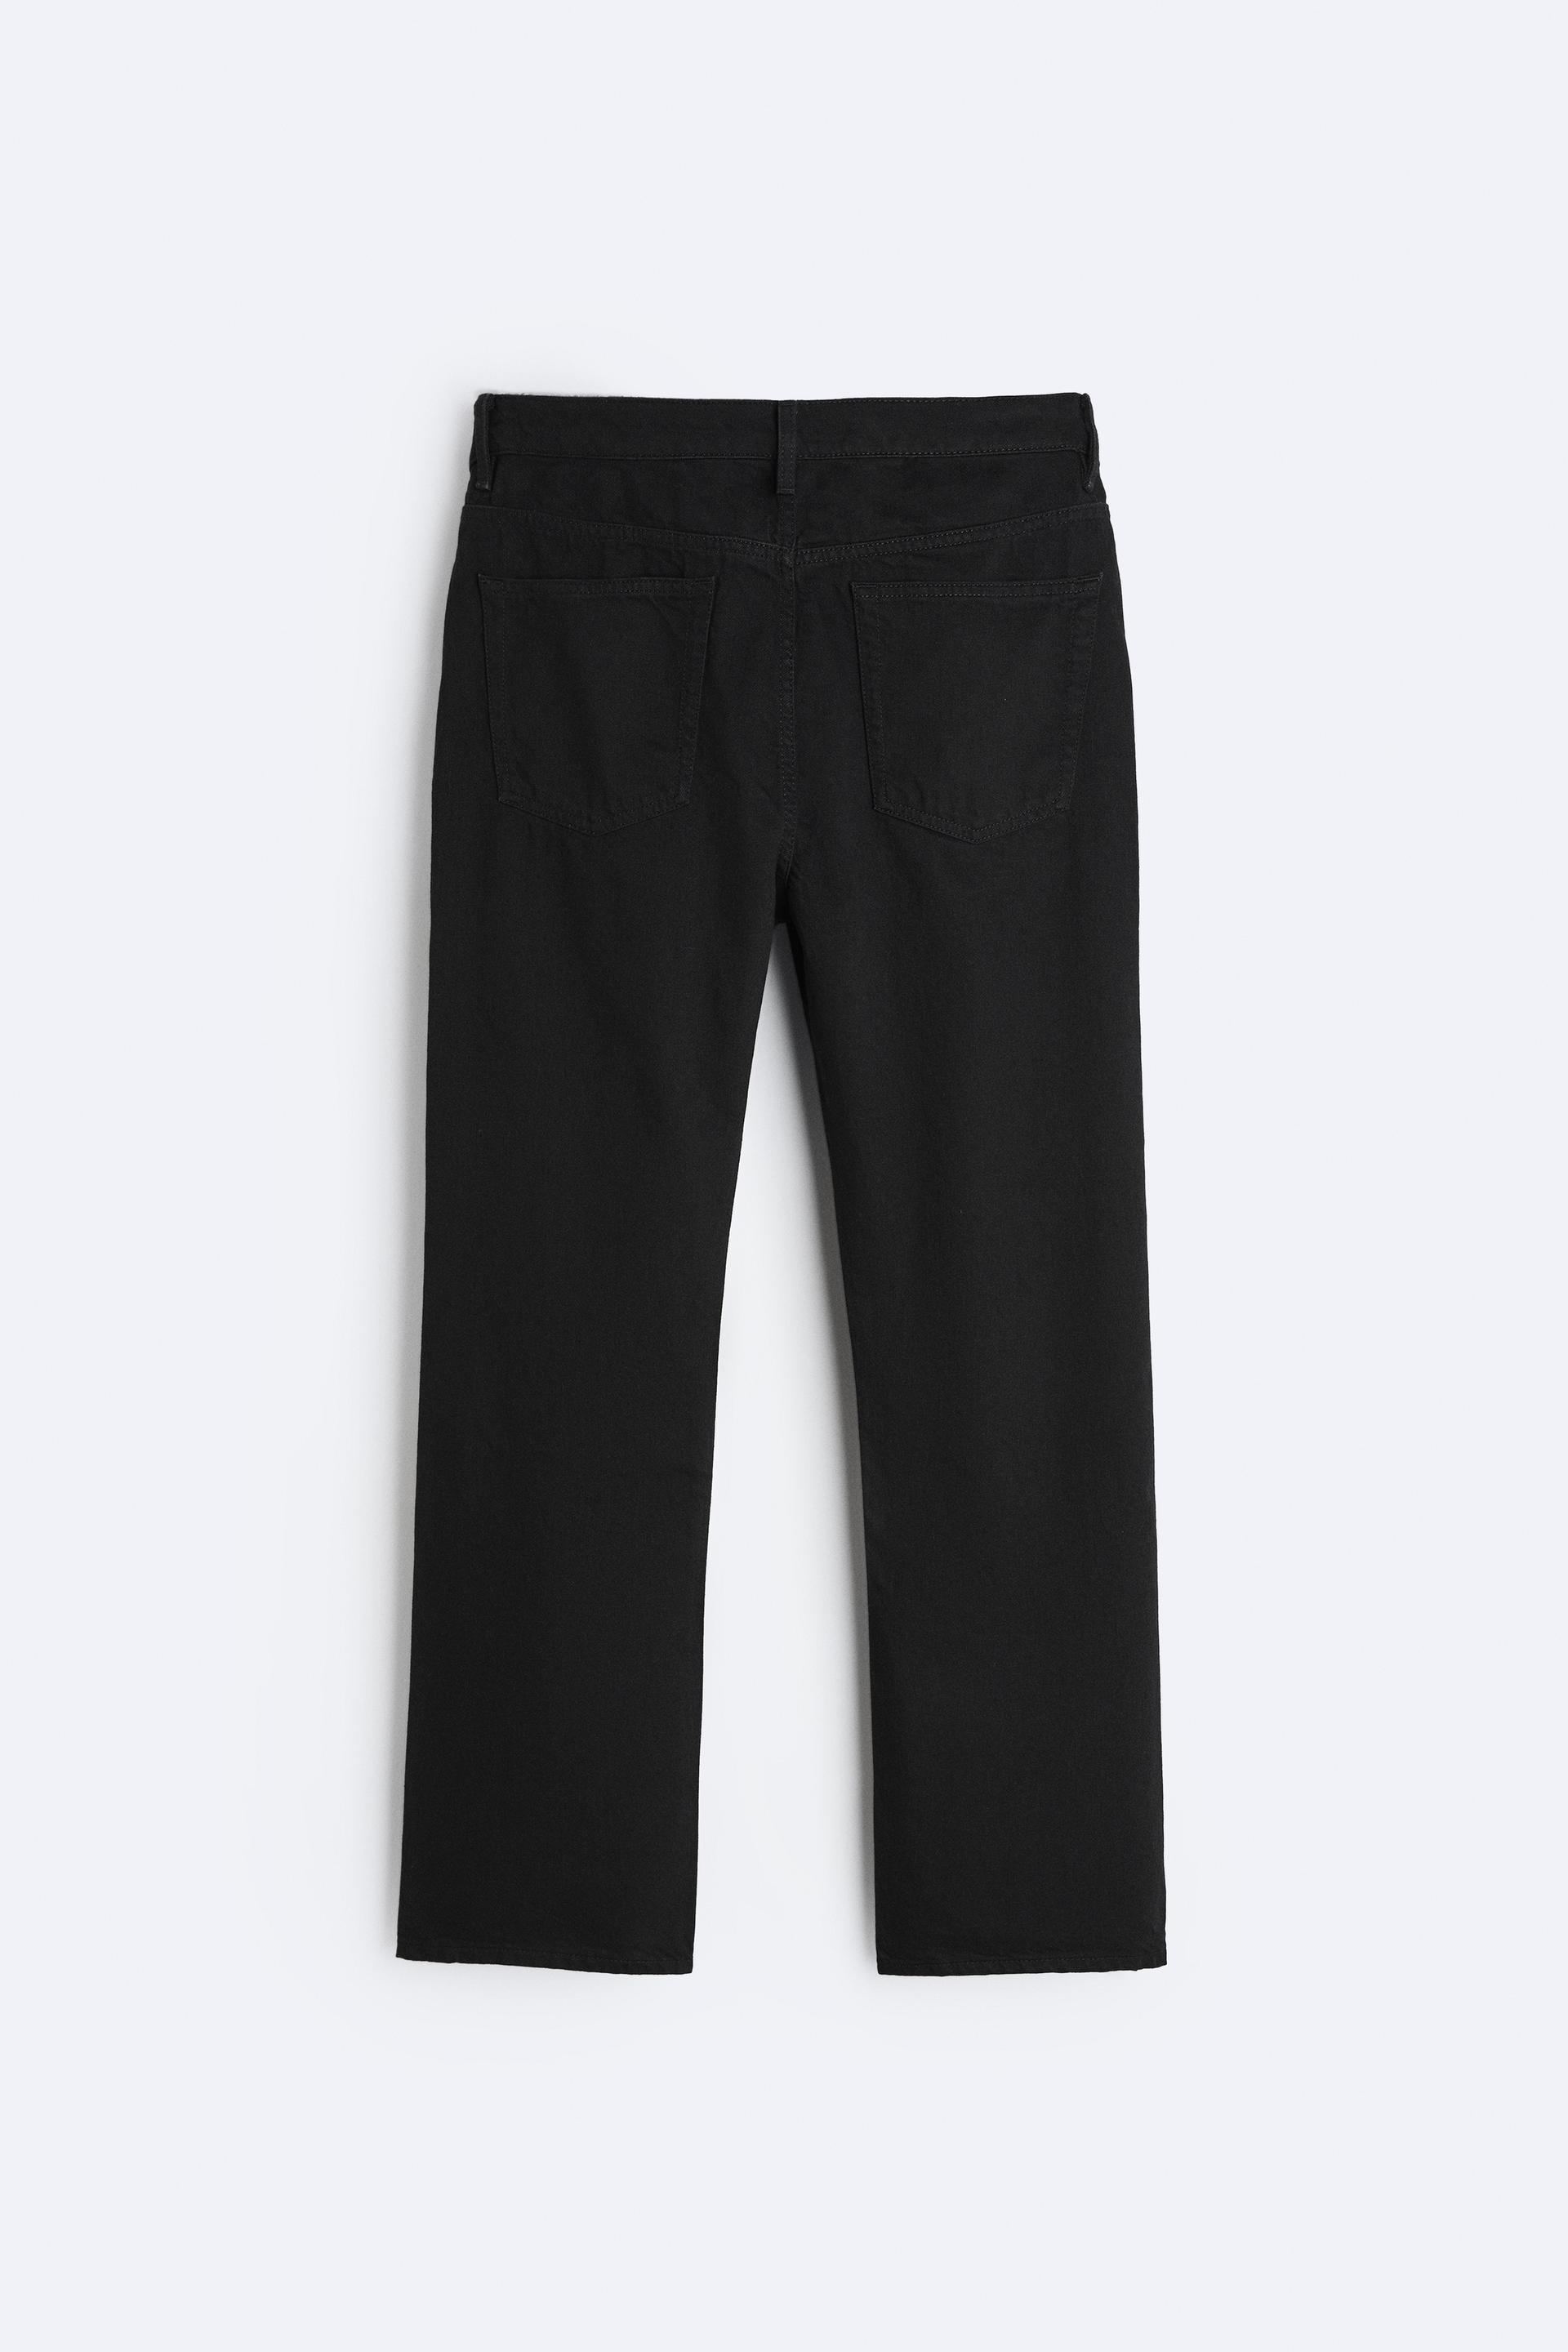 Jeans & Trousers, ZARA formal pants black